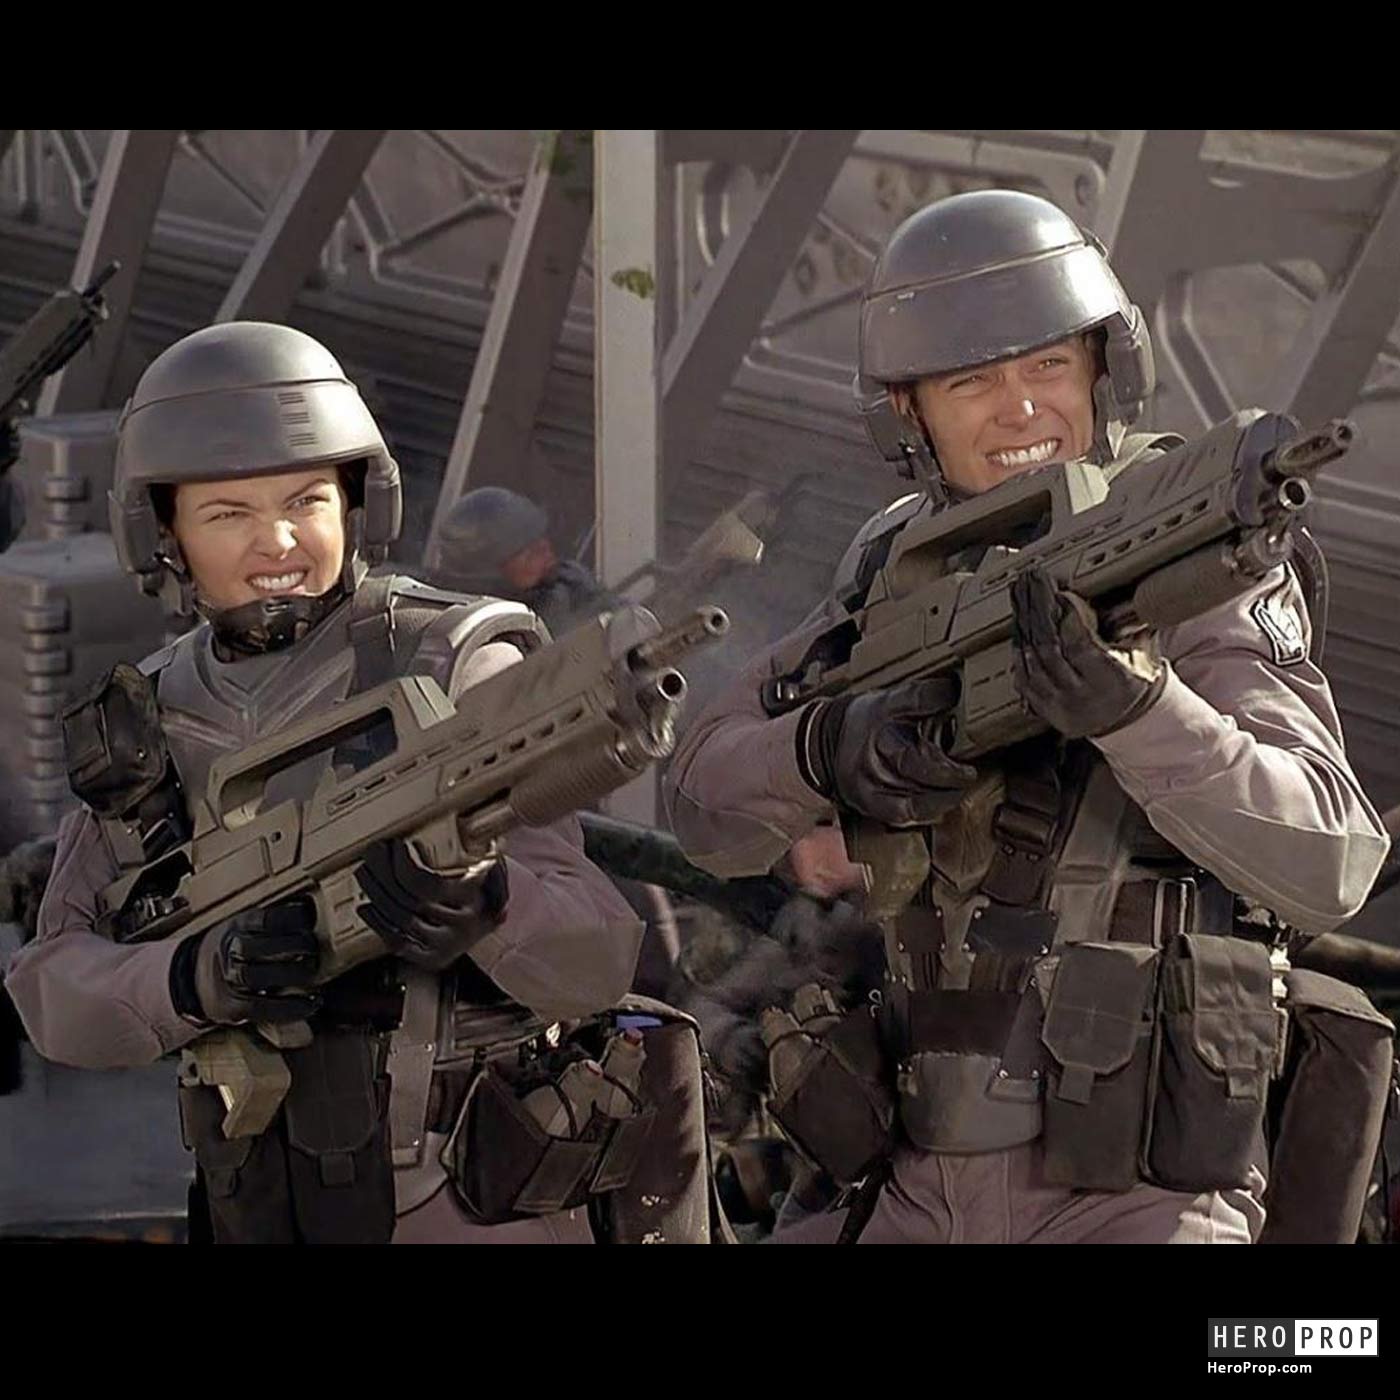 Bichos Battle Scene Film: Starship Troopers (USA 1997) Director